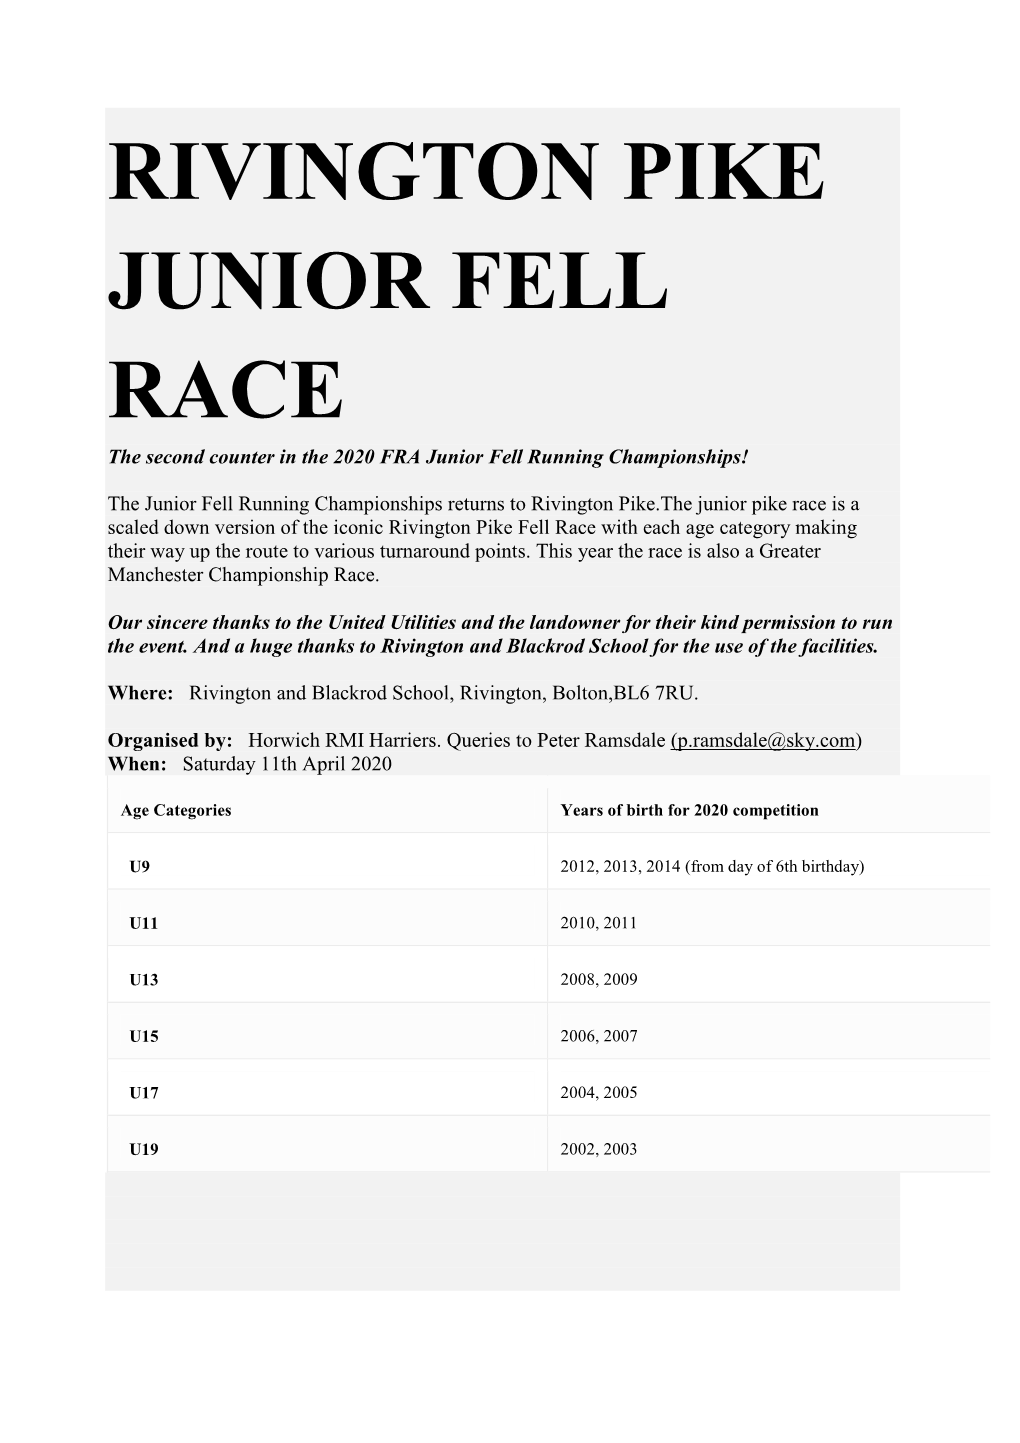 The Rivington Pike JUNIOR Fell Race CANCELLED